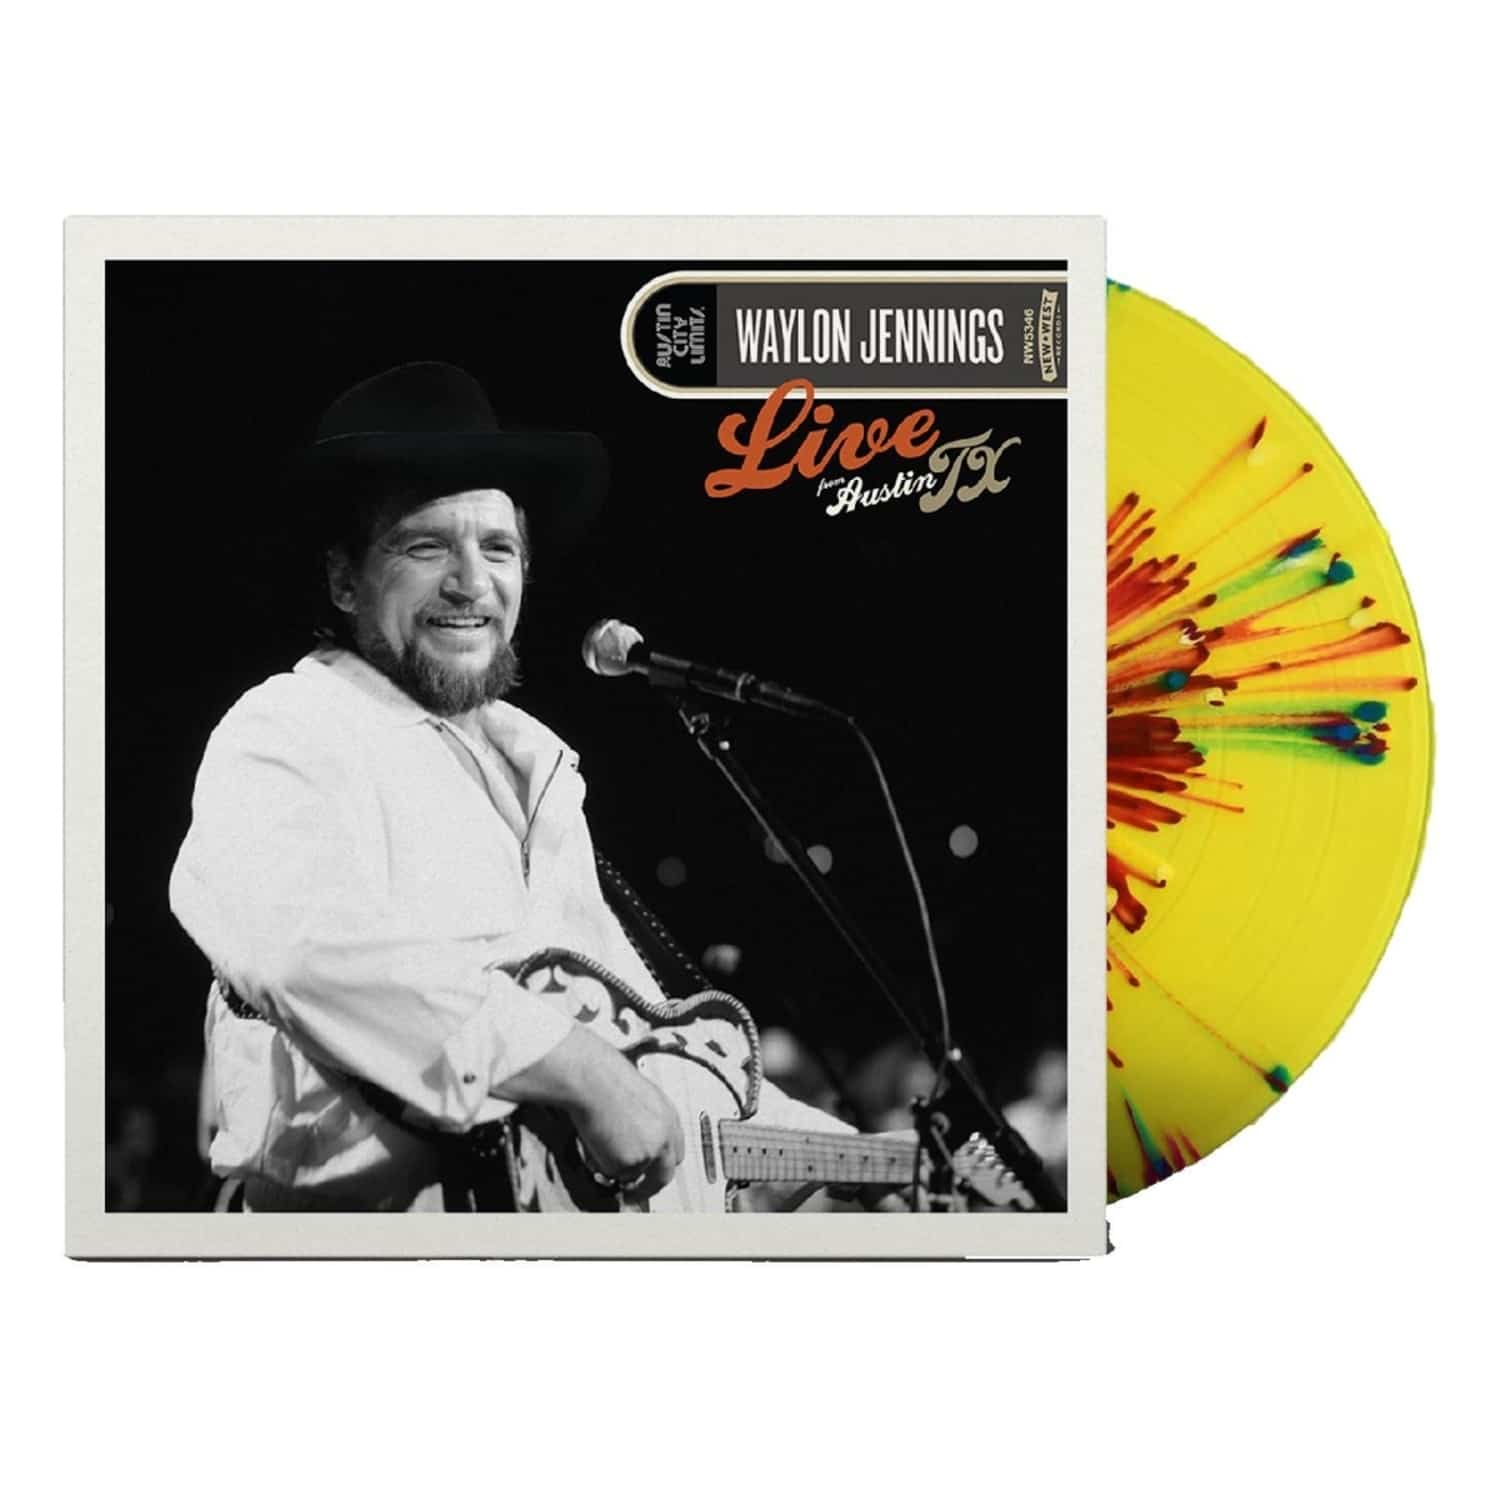 Waylon Jennings - LIVE FROM AUSTIN, TX 84 